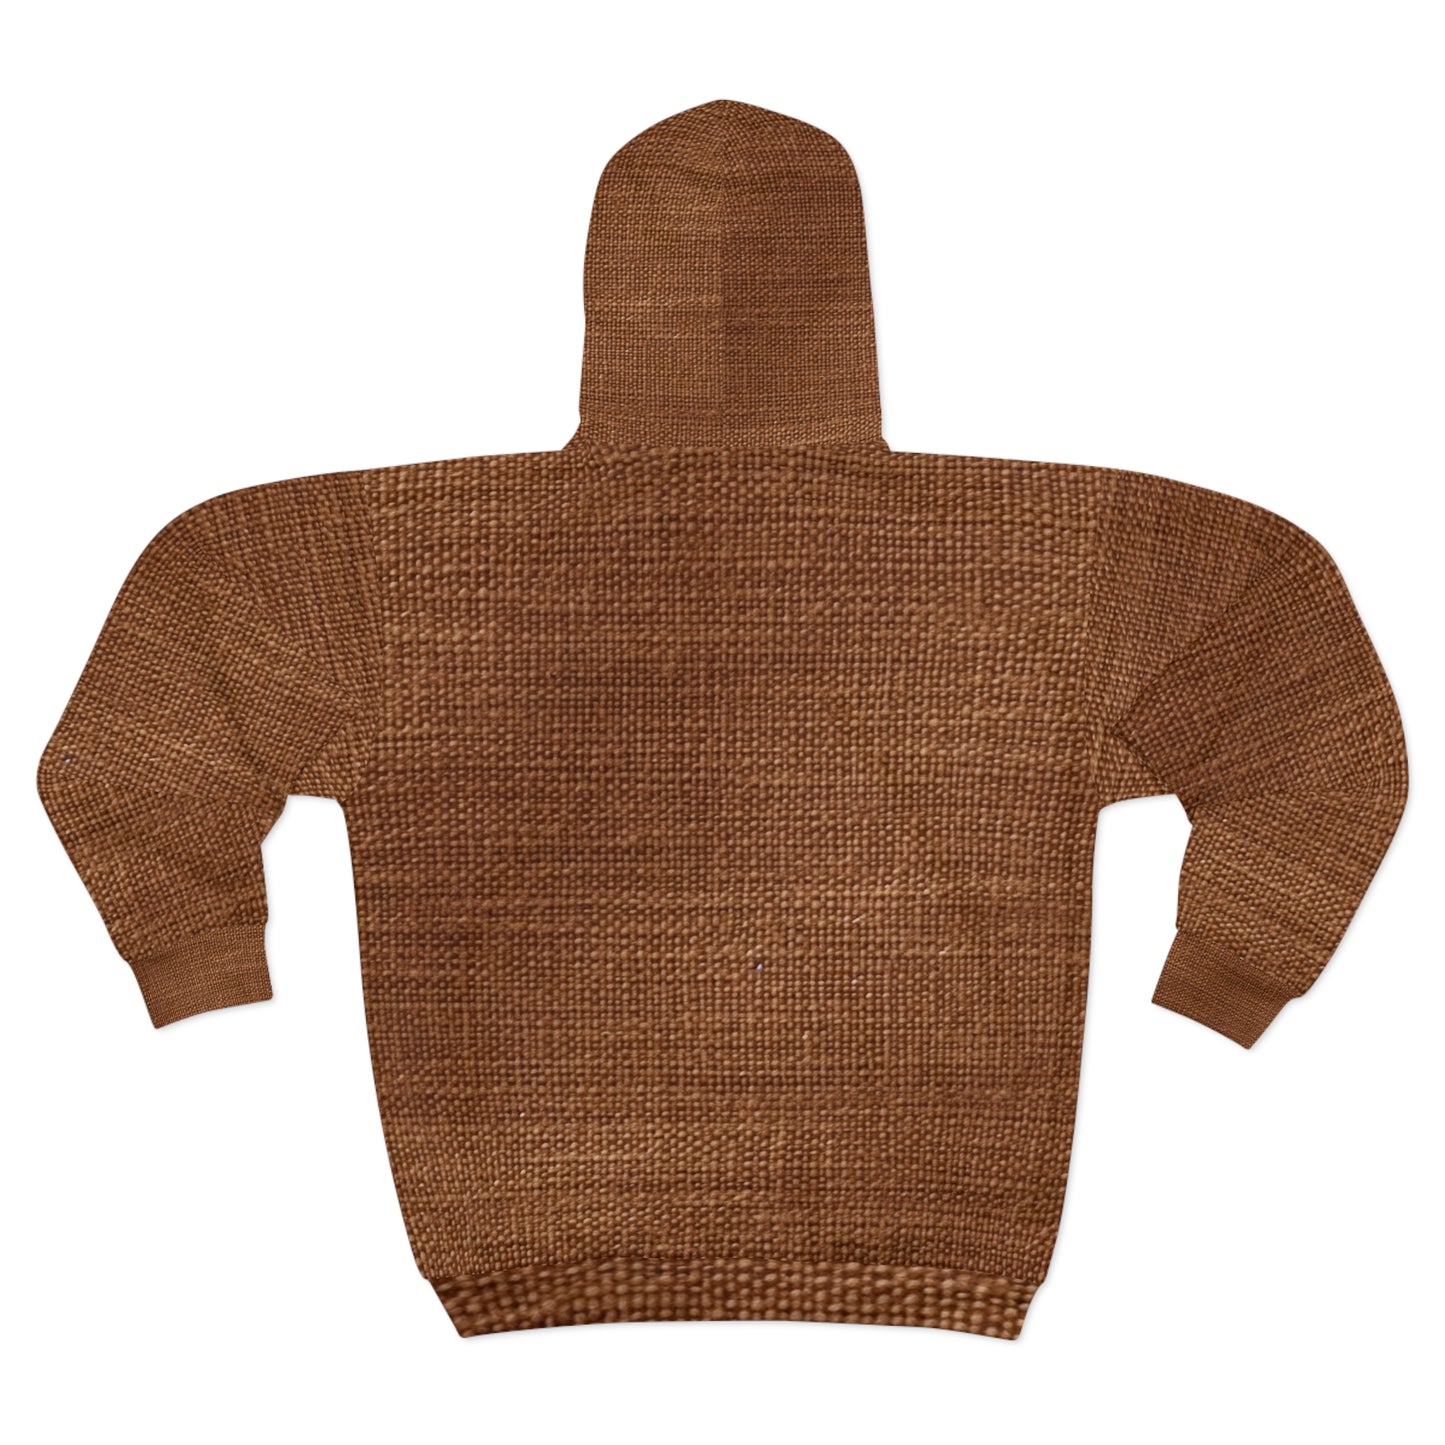 Luxe Dark Brown: Denim-Inspired, Distinctively Textured Fabric - Unisex Zip Hoodie (AOP)